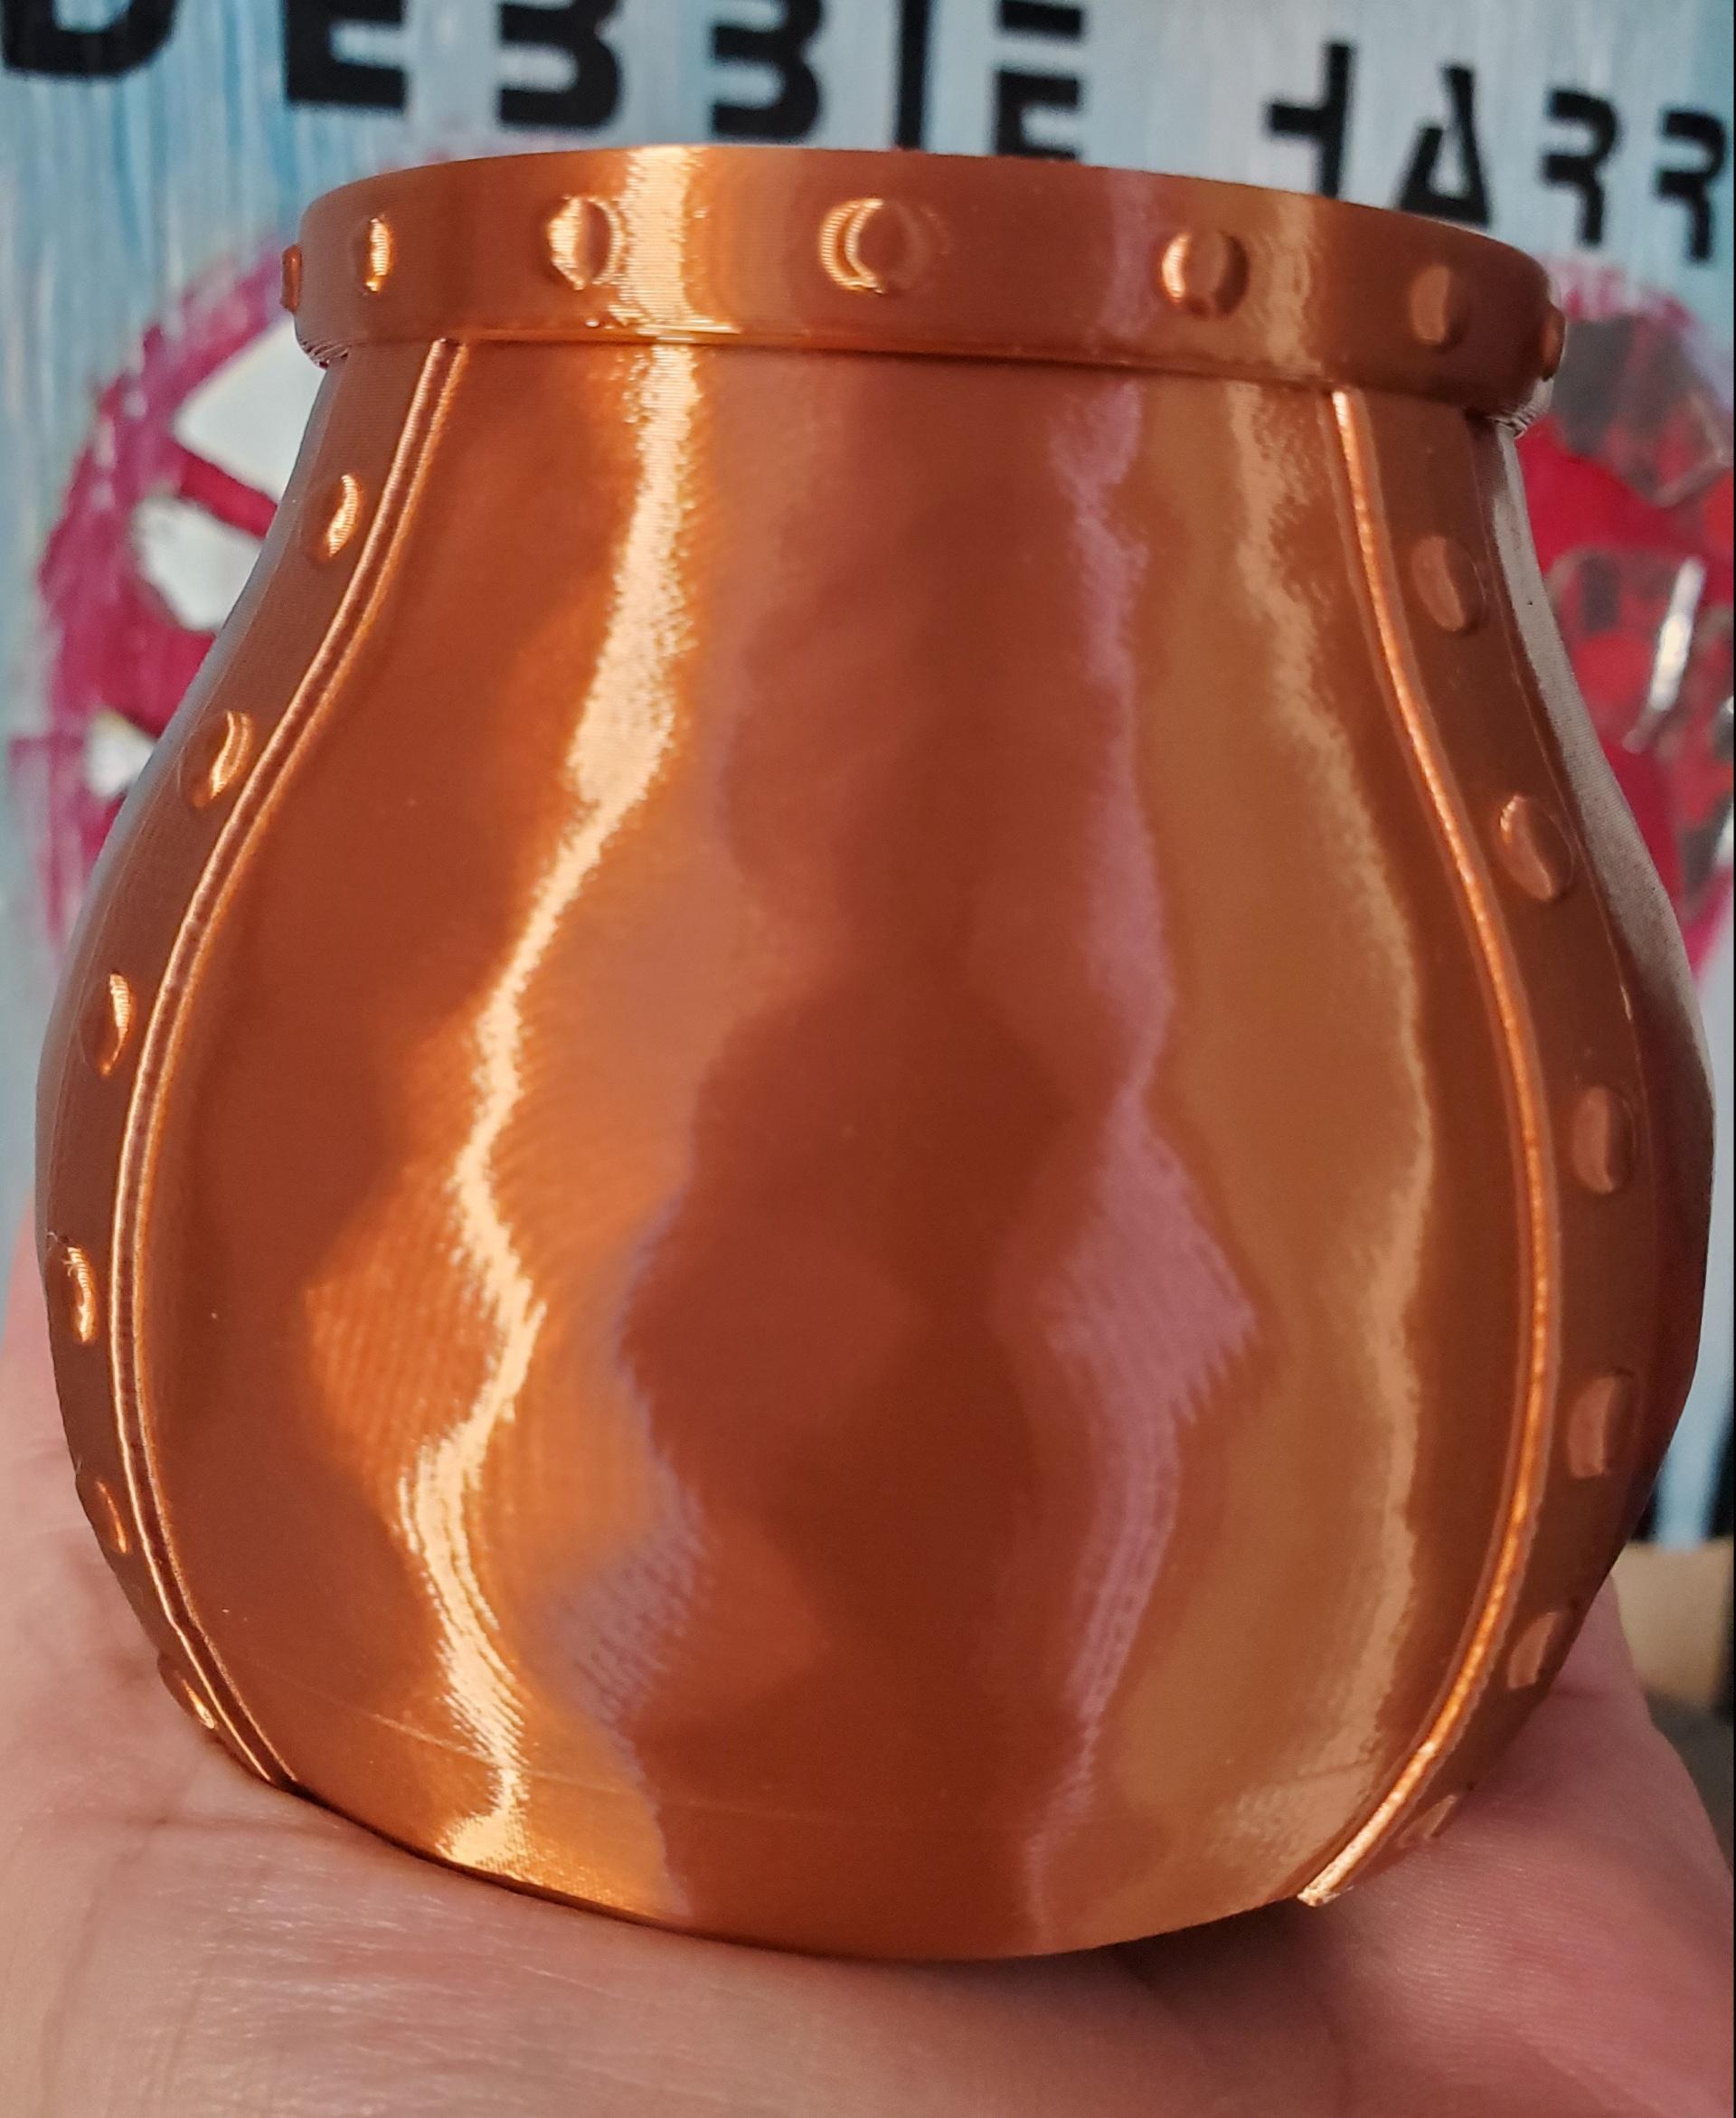 Copper Cauldron - looks like a real shiny copper kettle - 3d model